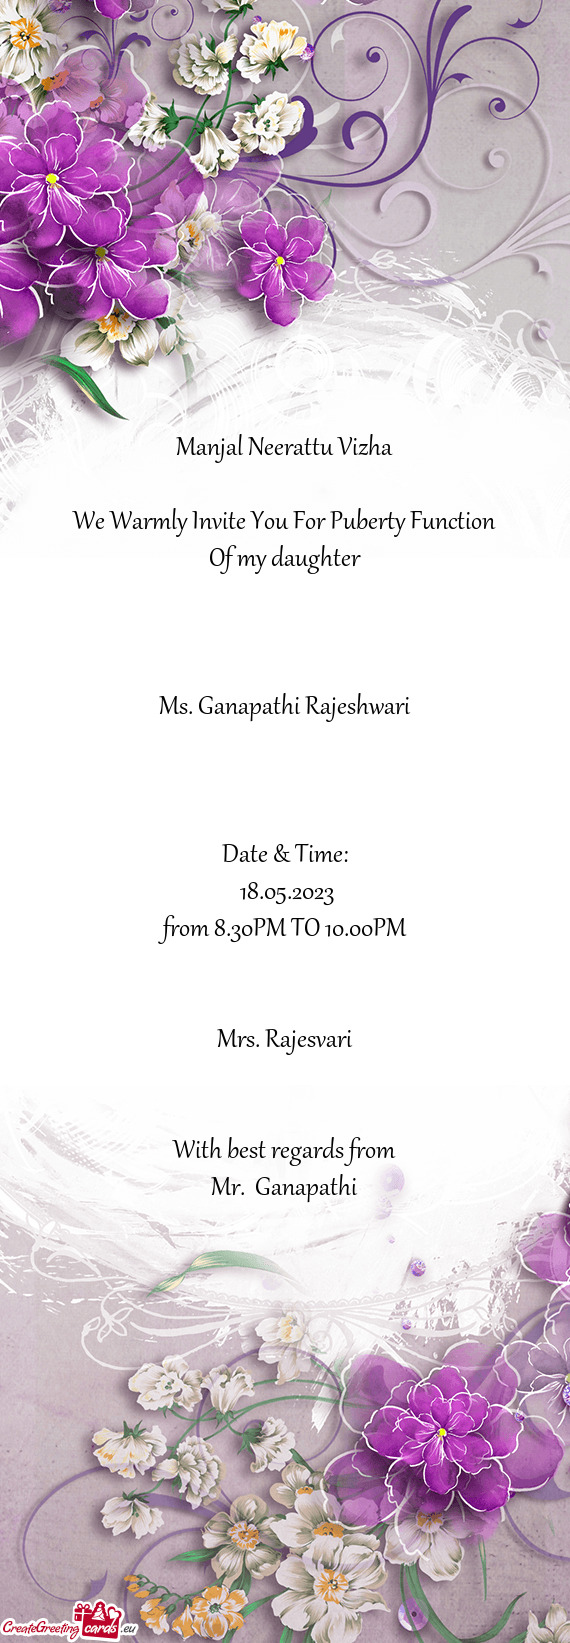 Ms. Ganapathi Rajeshwari